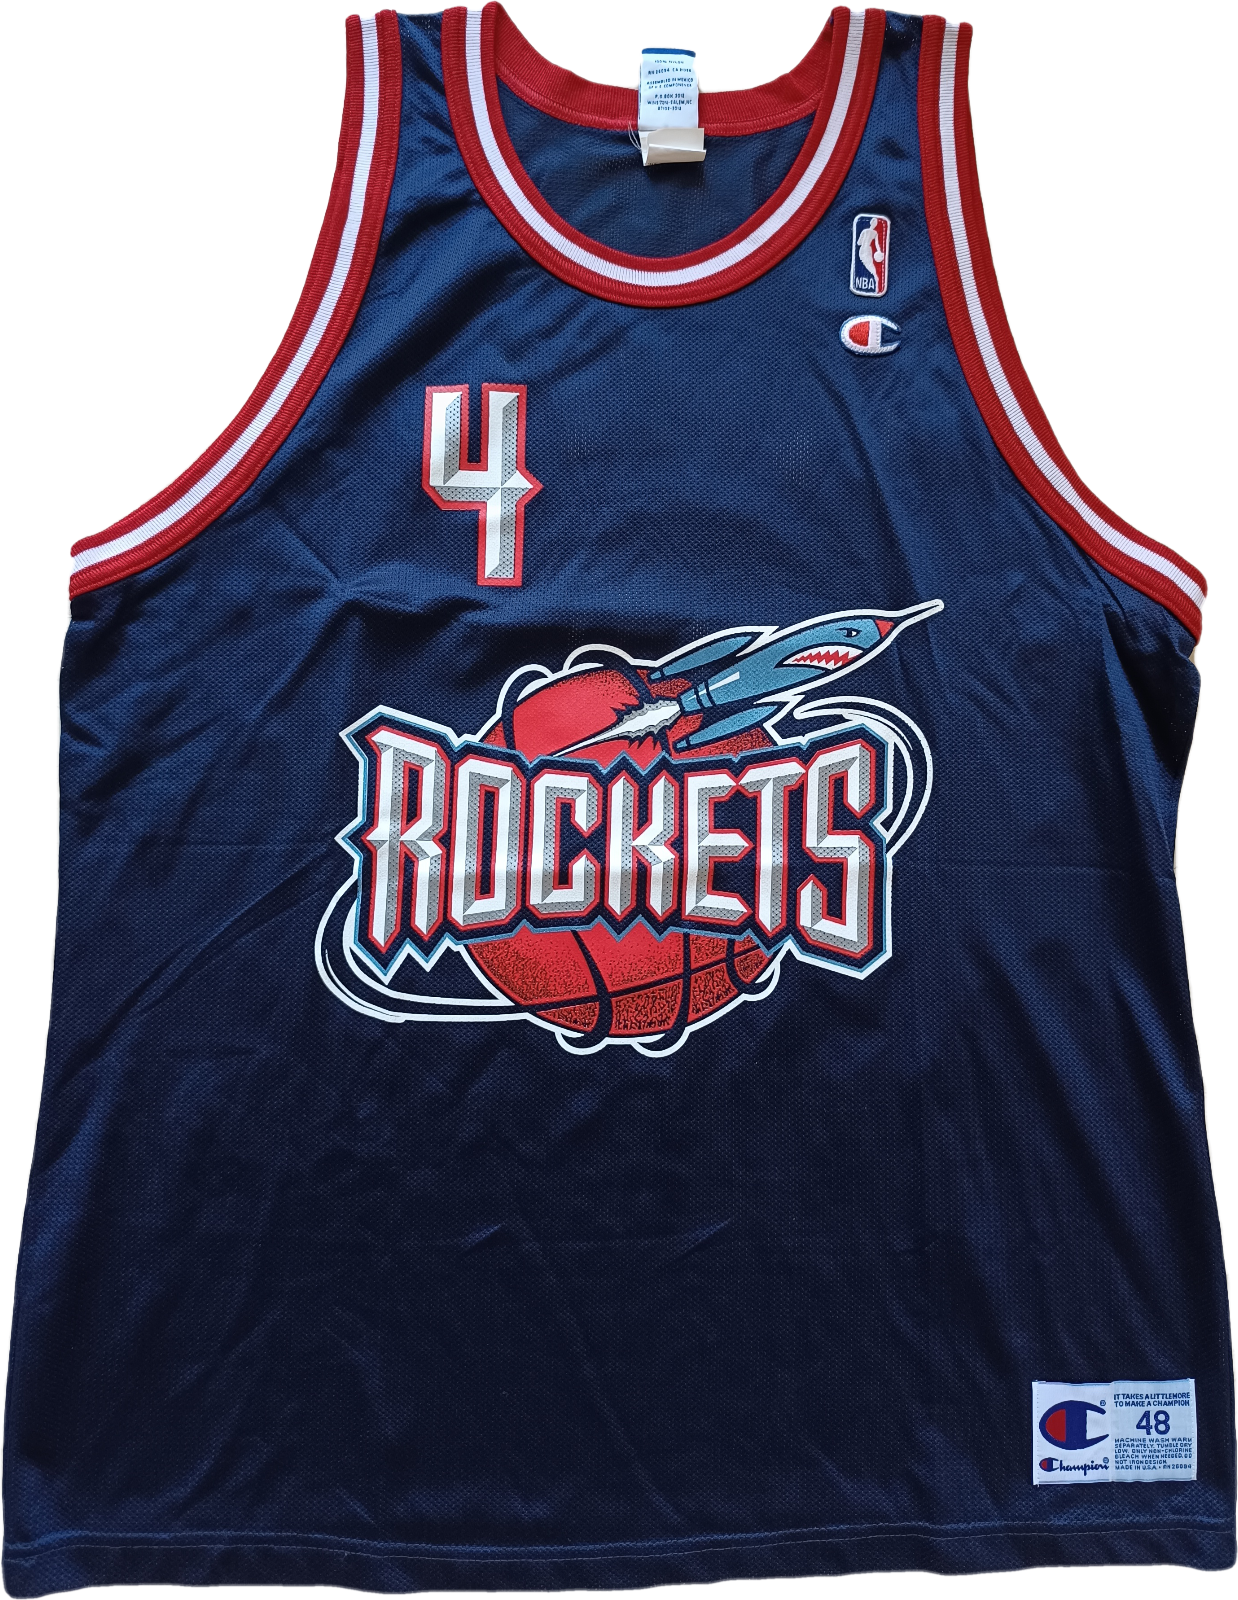 Houston Rockets 1996-00 maglia Champion Barkley #4 away NBA